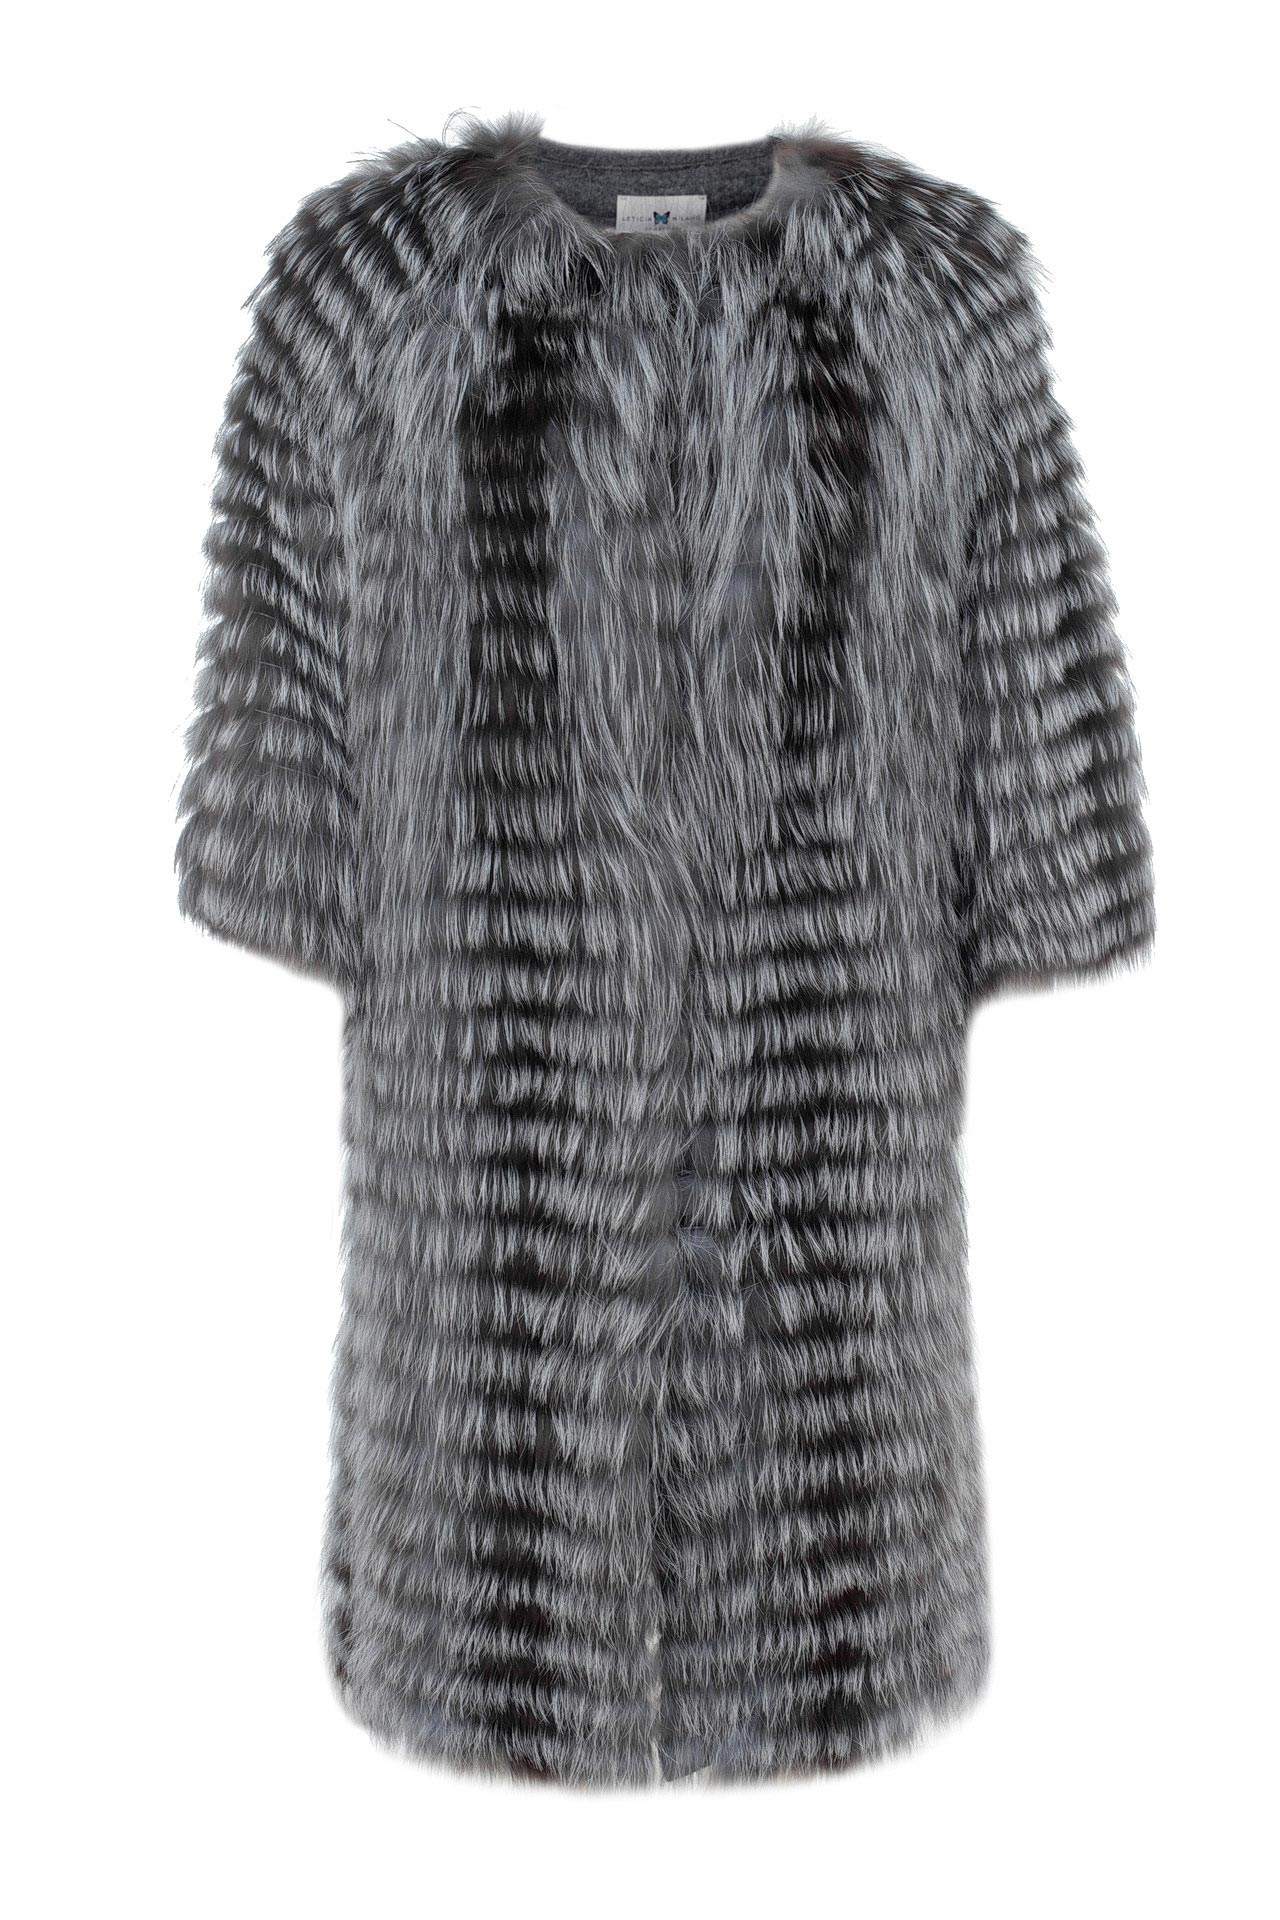 Одежда женская Кардиган LETICIA MILANO (K1196M22/18.1). Купить за 37500 руб.